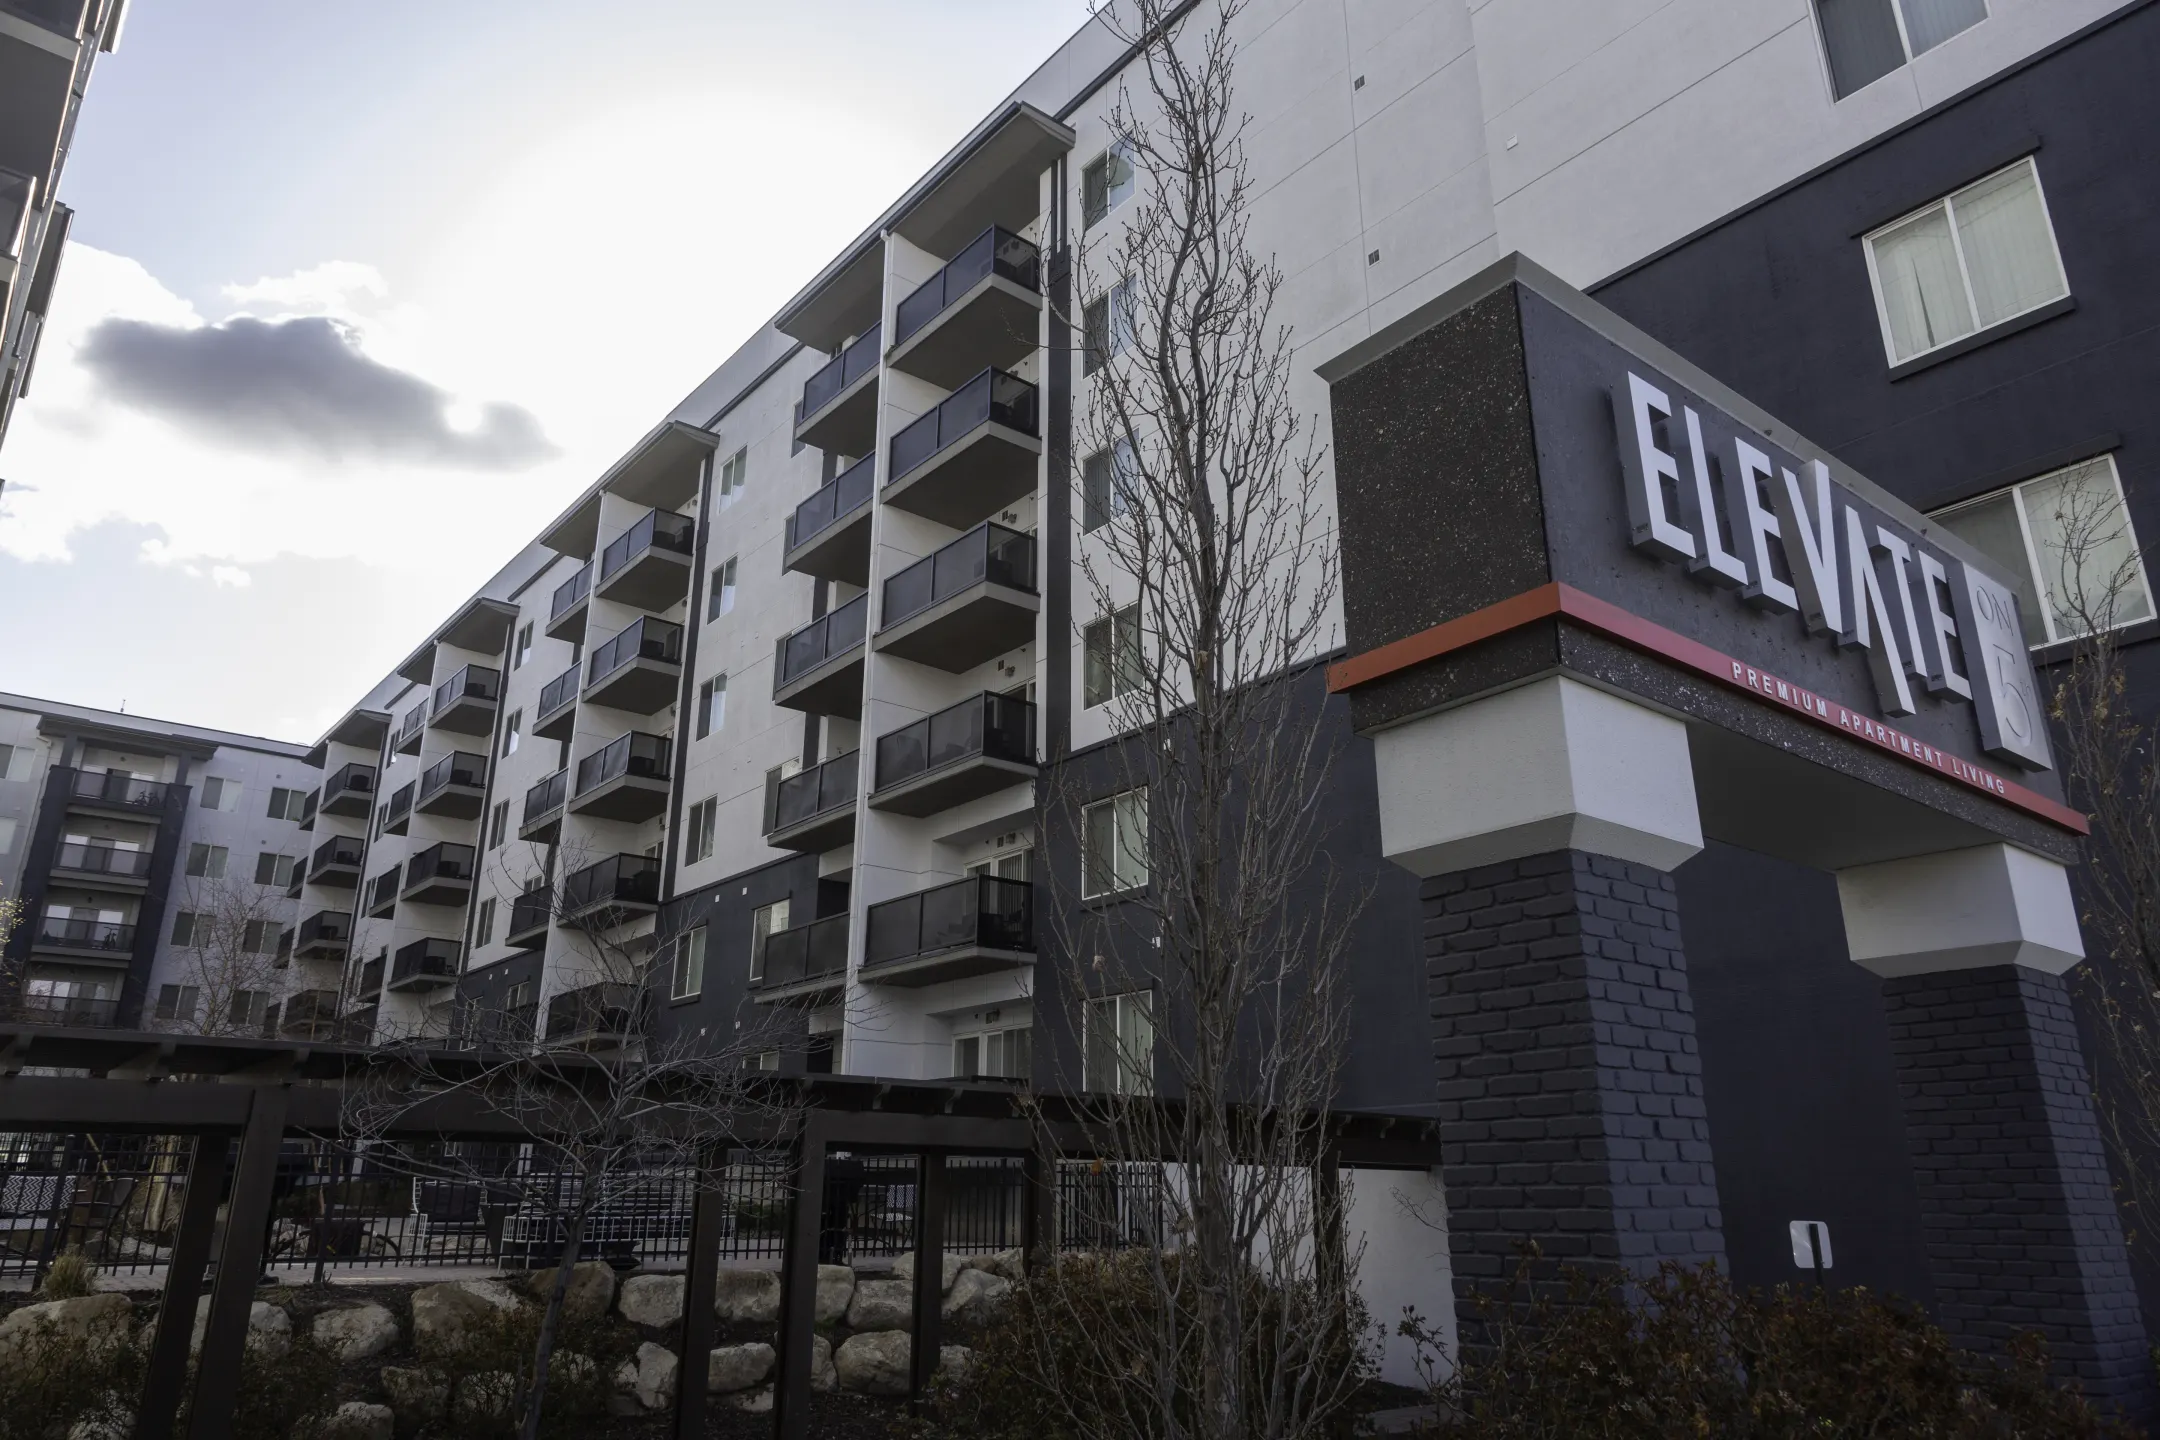 Building - Elevate on 5th Apartments! - Salt Lake City, UT